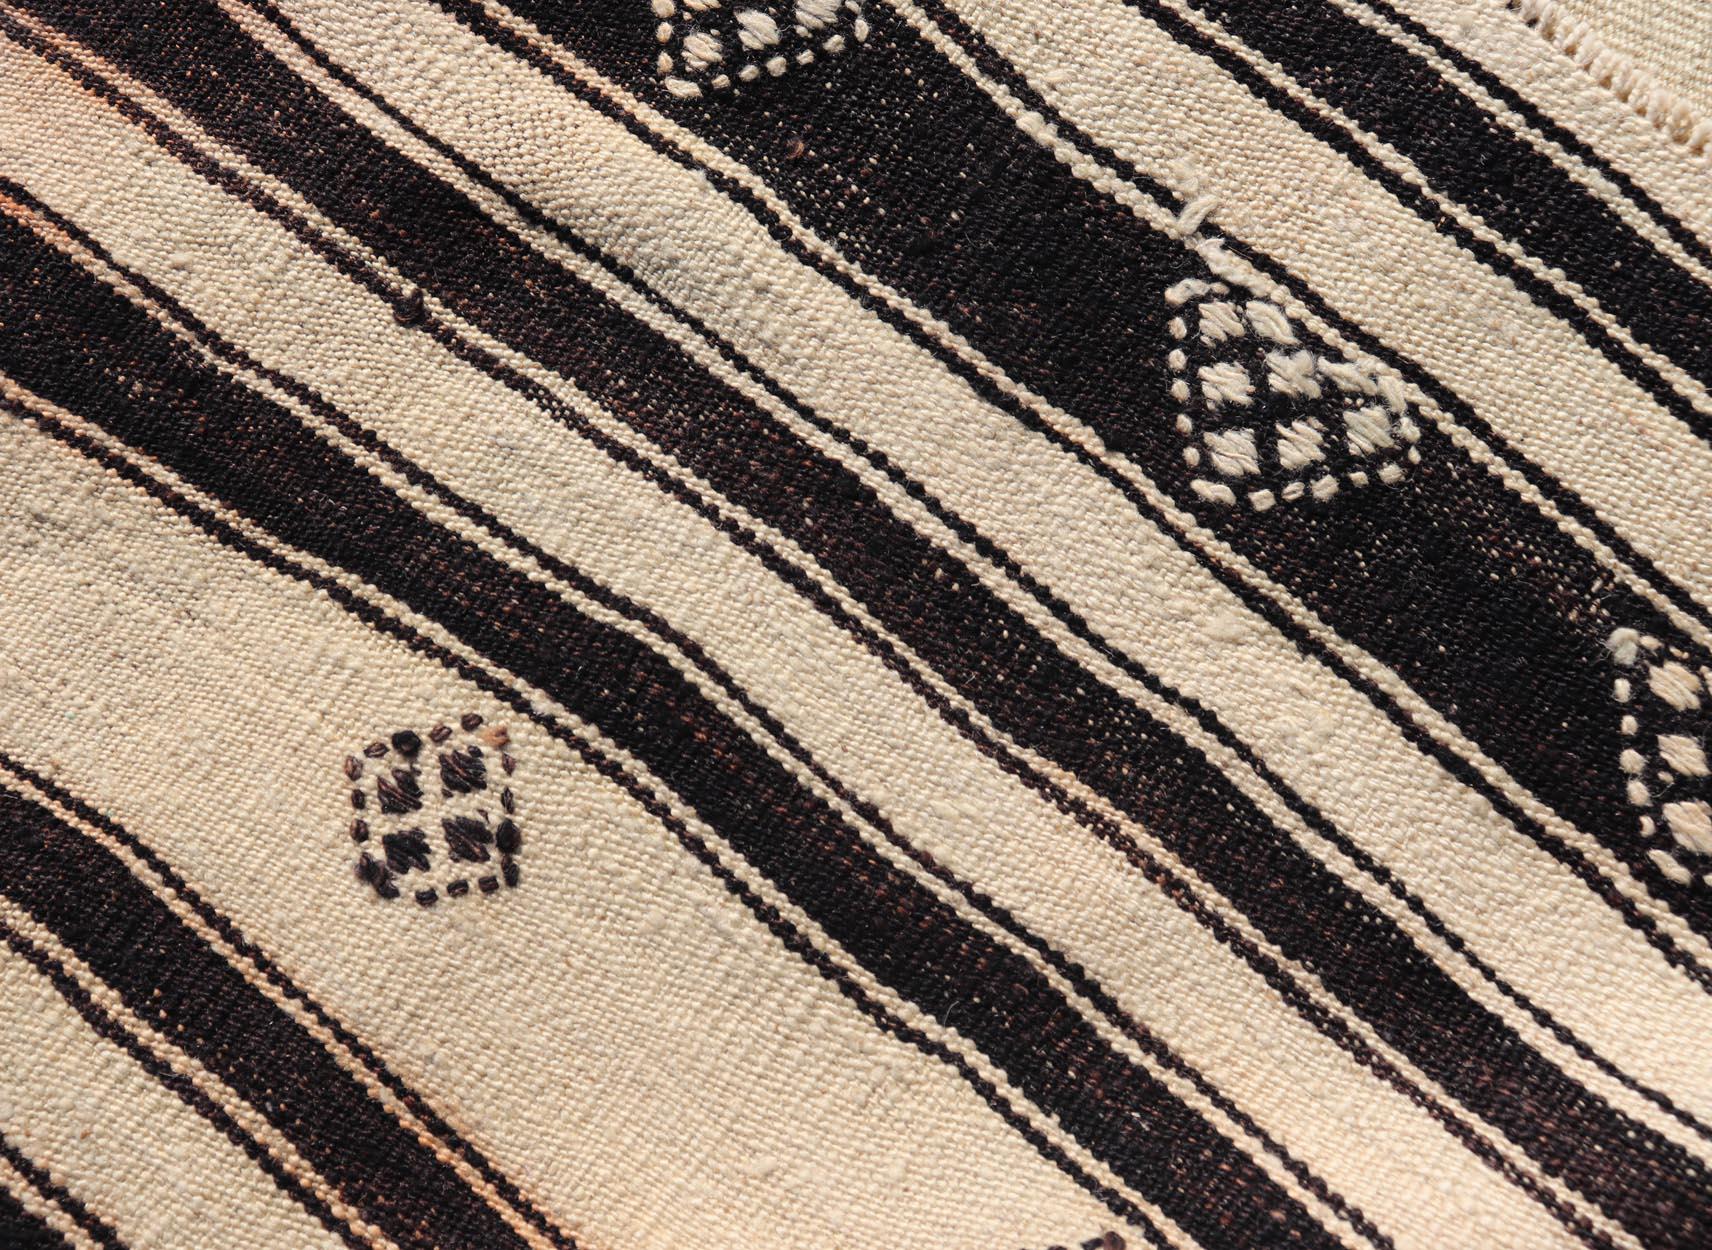 Kilim Stripe Design Turkish Vintage Flat-Weave Rug in Dark Brown, Taupe, and Cream  For Sale